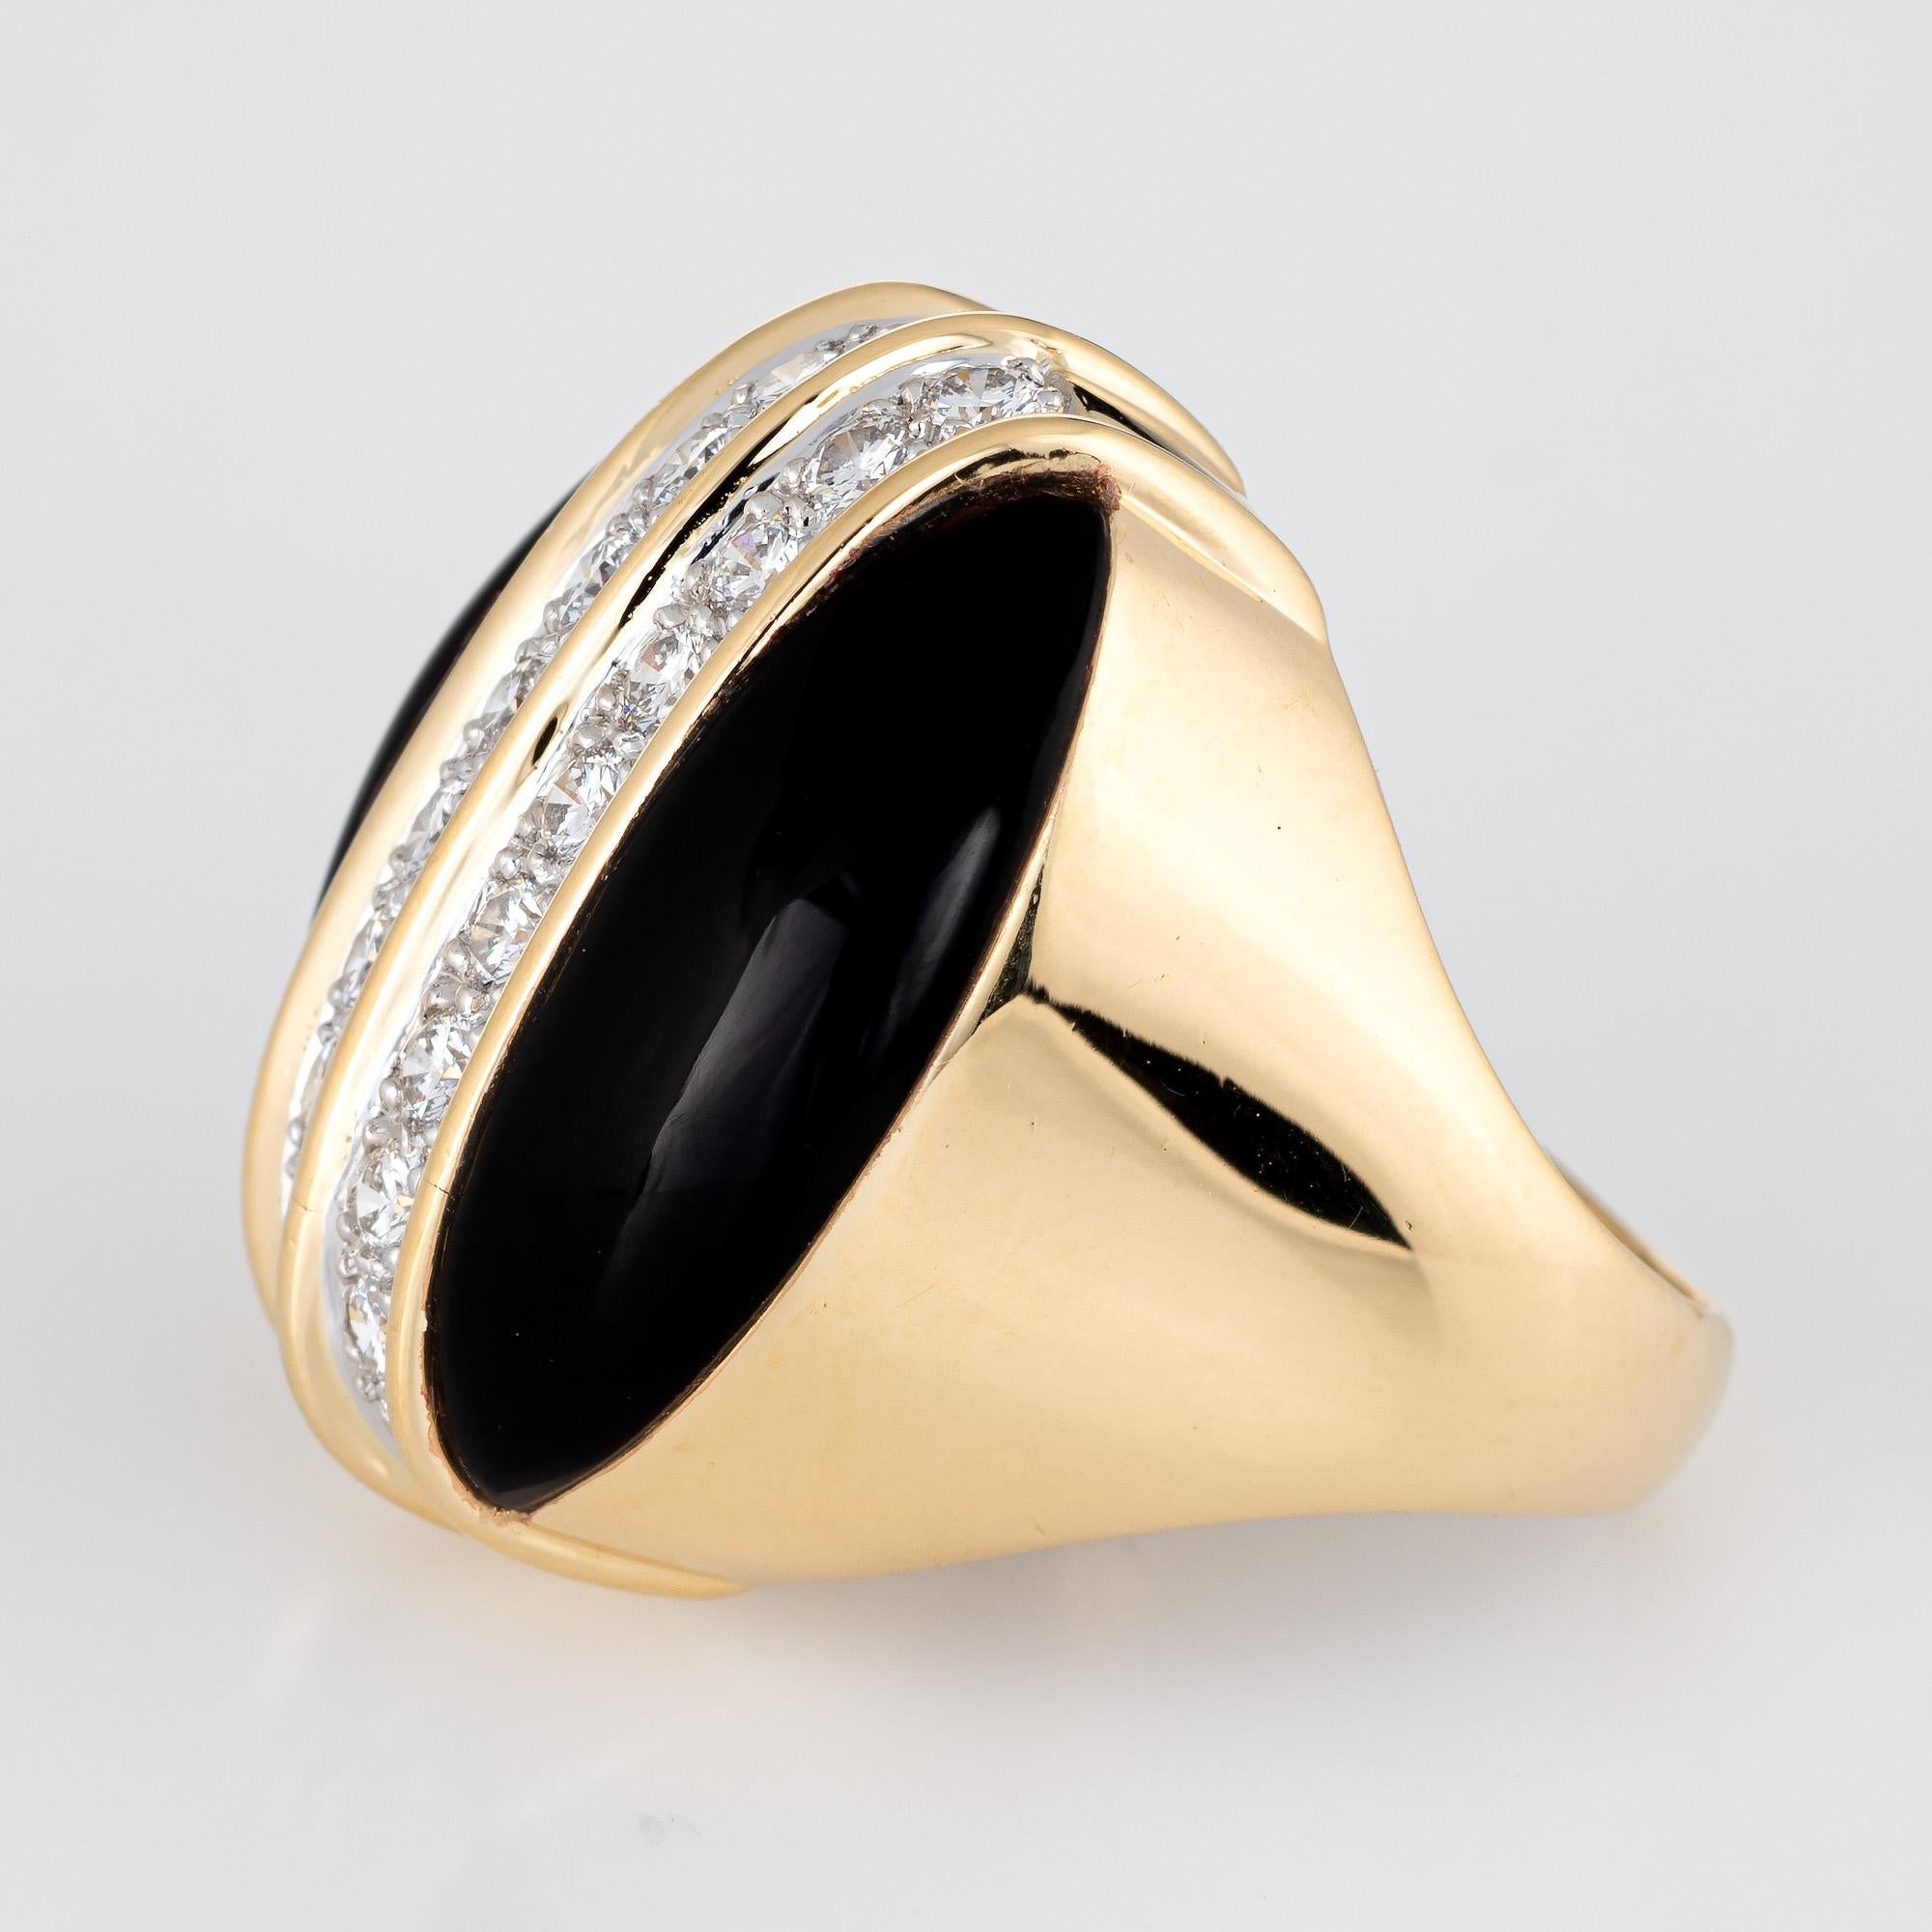 Round Cut Large Onyx Diamond Ring Vintage 18 Karat Yellow Gold Oval Cocktail Jewelry